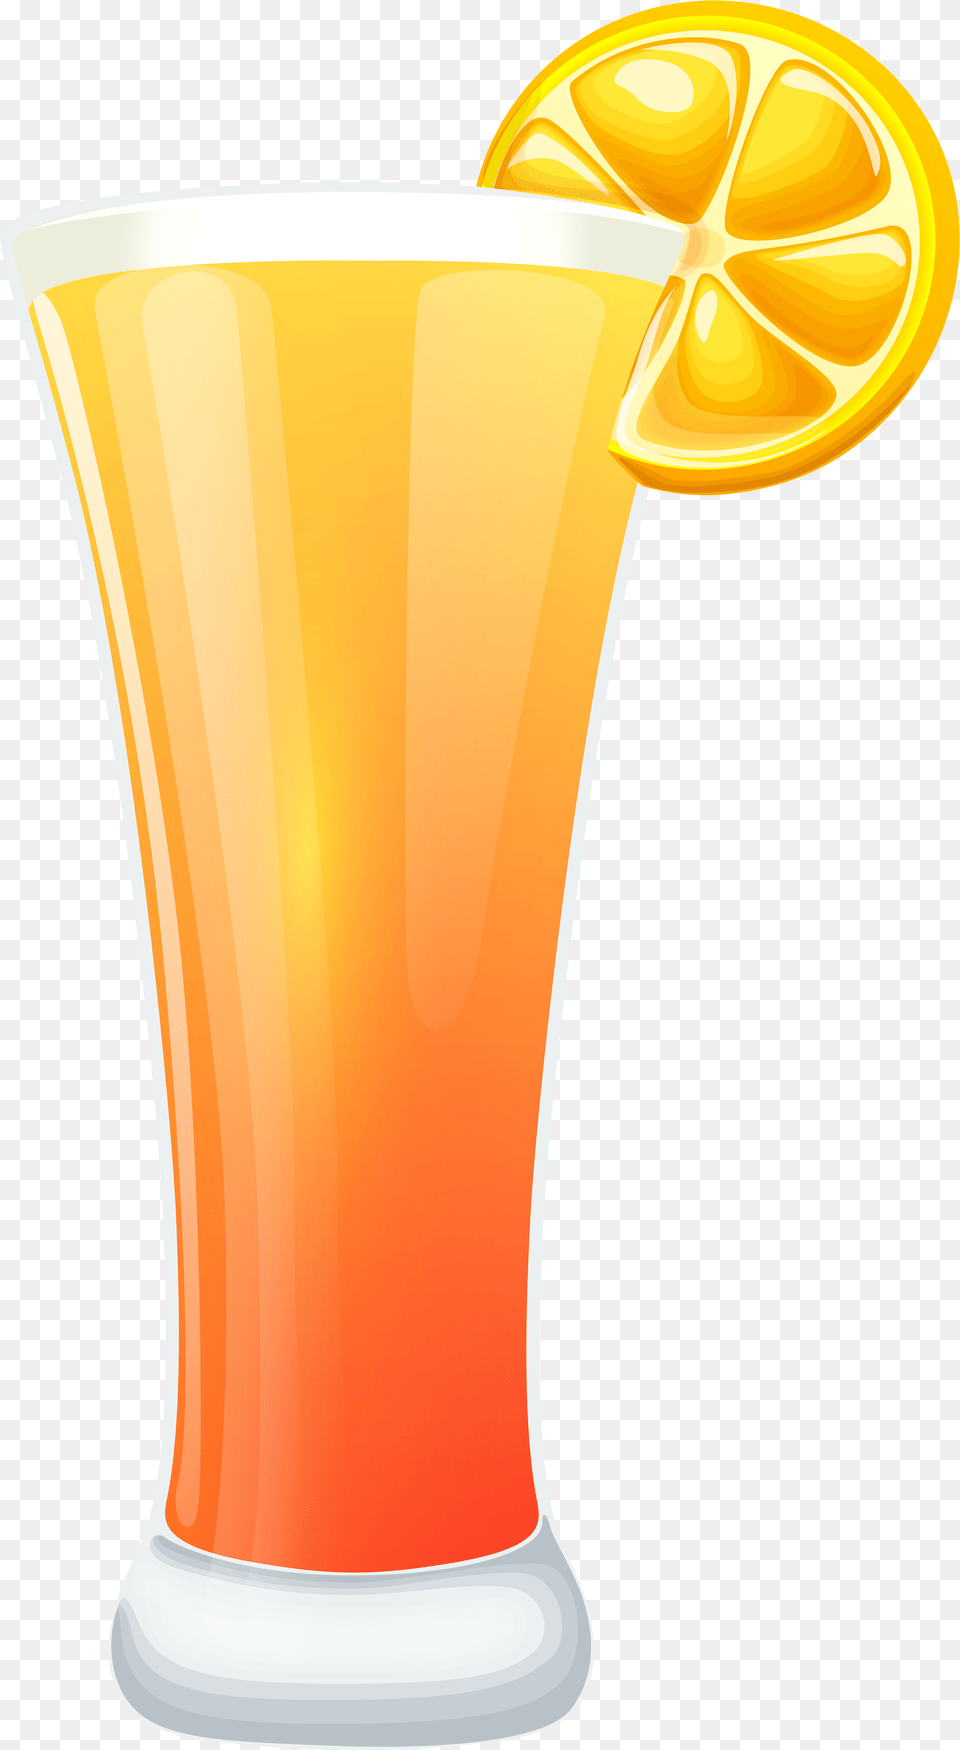 Orange Juice Clip Artu200b Gallery Yopriceville Orange Juice Clipart, Beverage, Orange Juice, Glass, Smoke Pipe Free Png